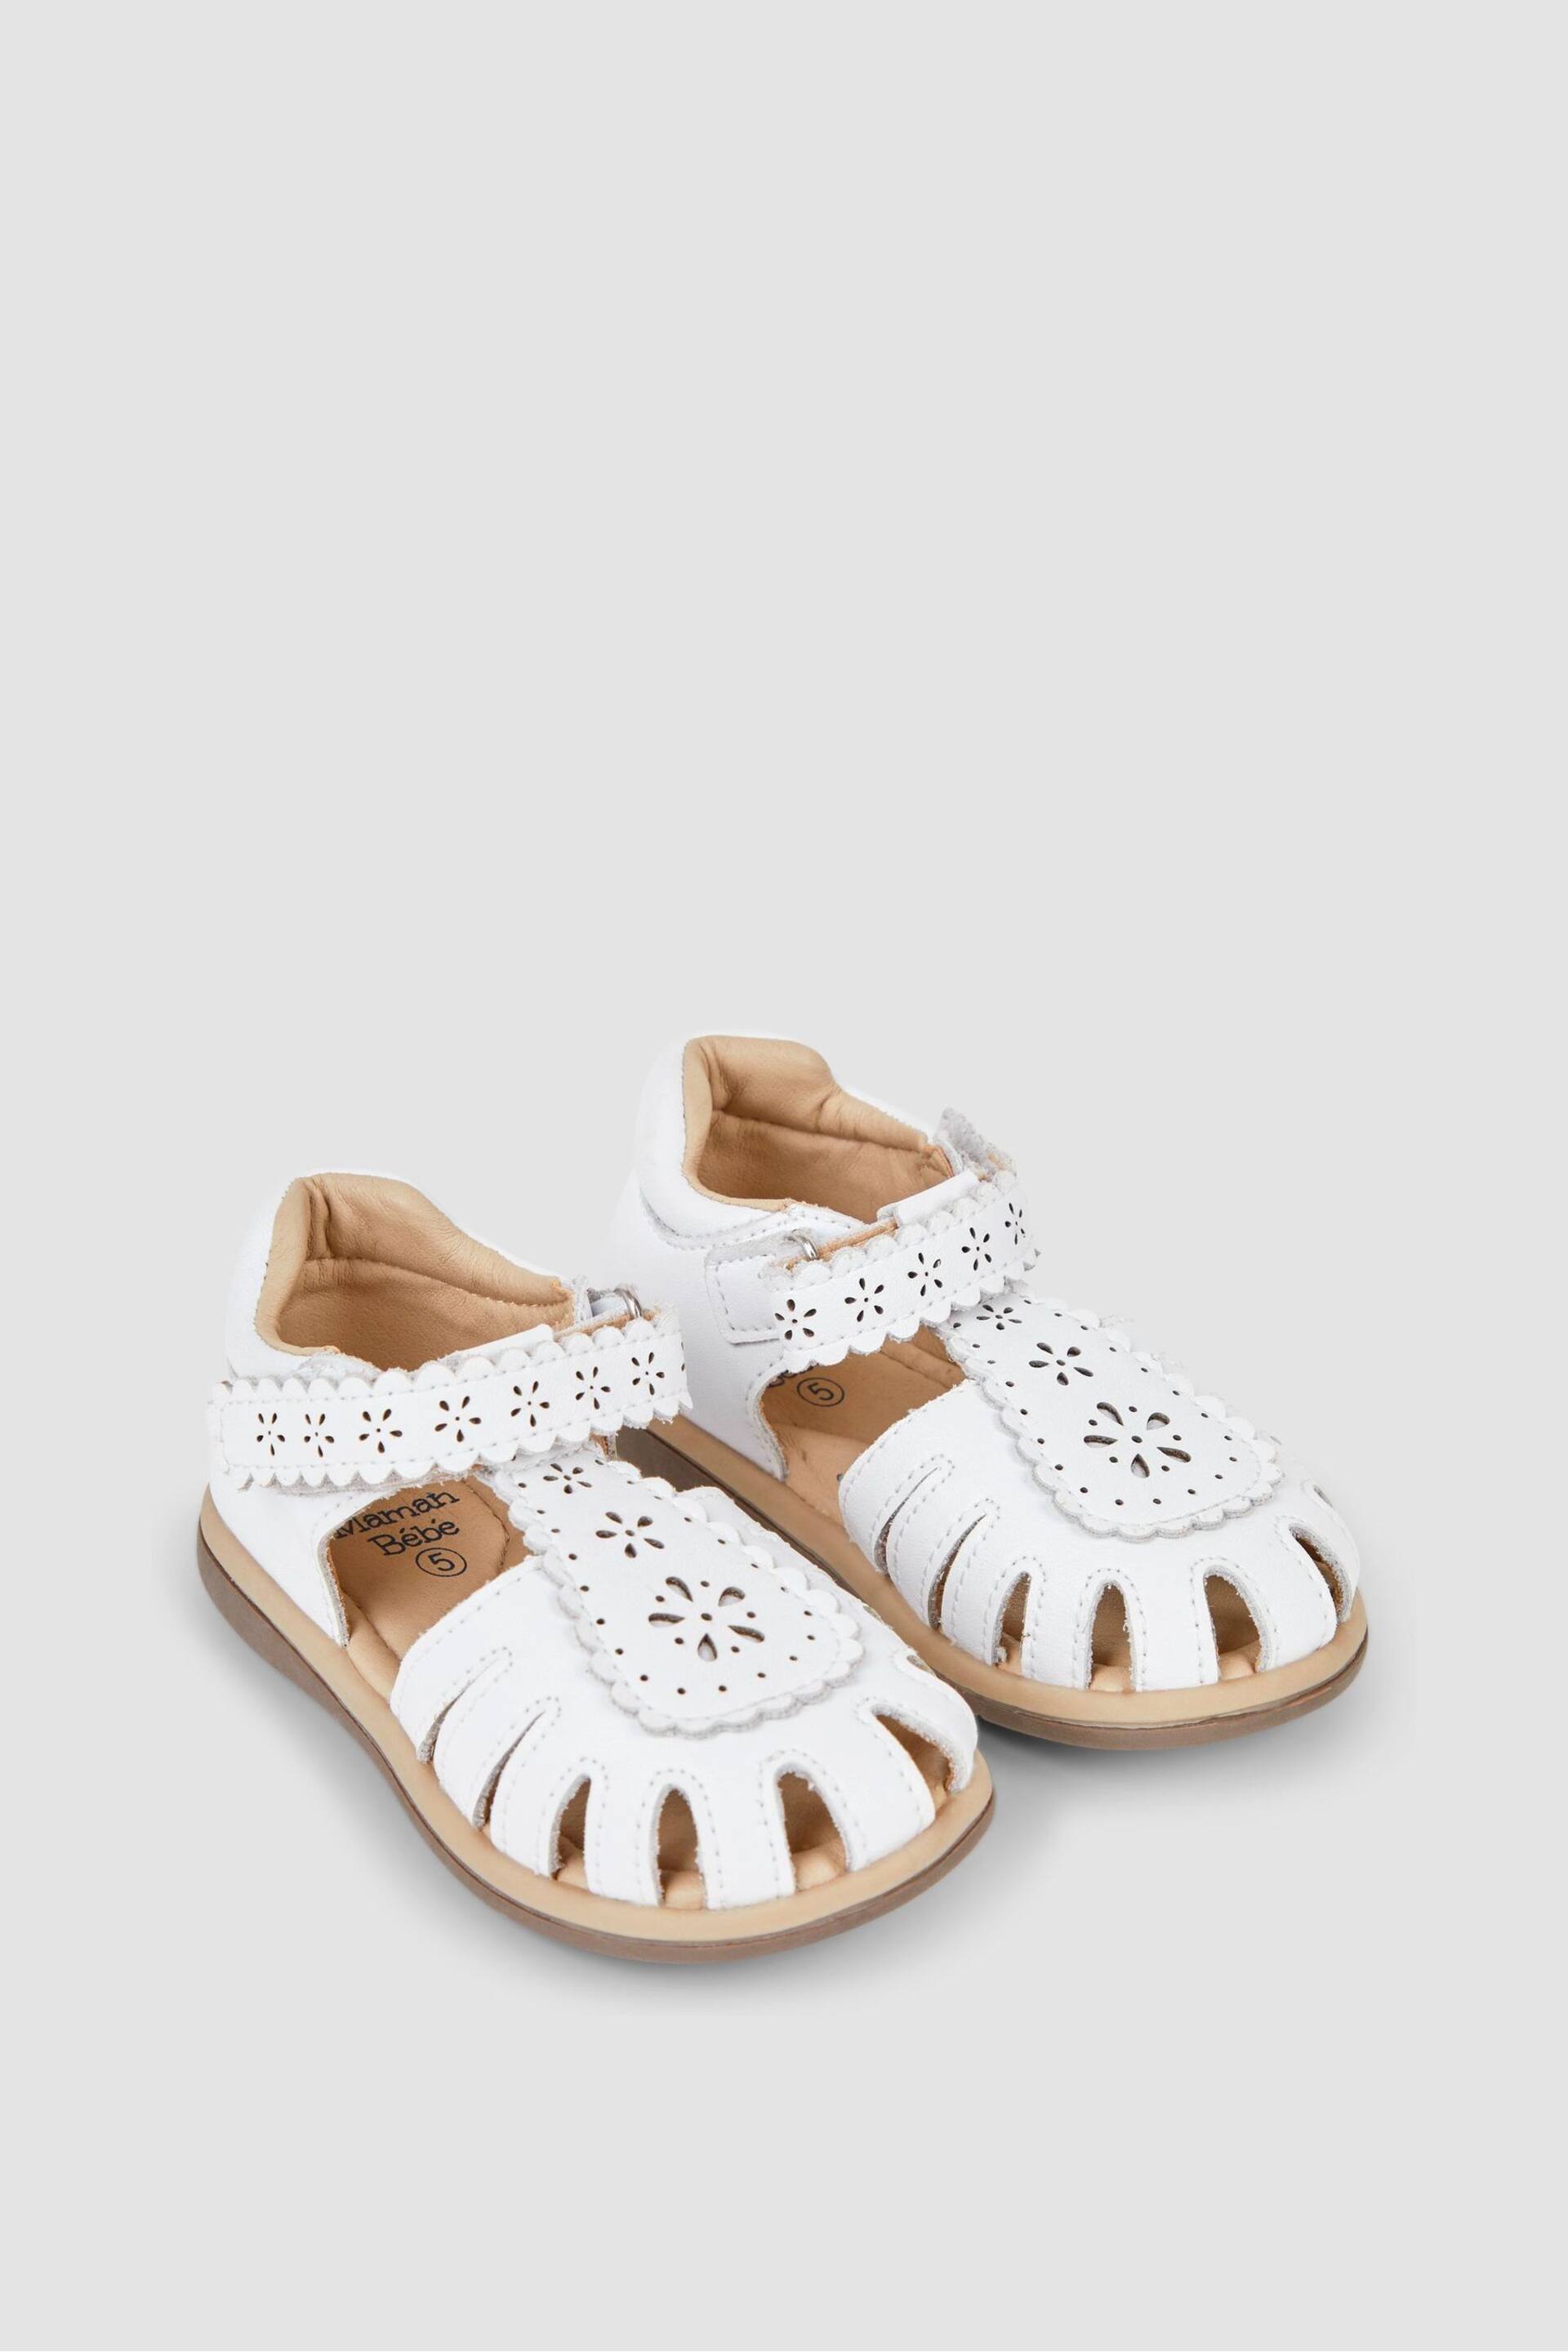 JoJo Maman Bébé White Pretty Leather Closed Toe Sandals - Image 1 of 6